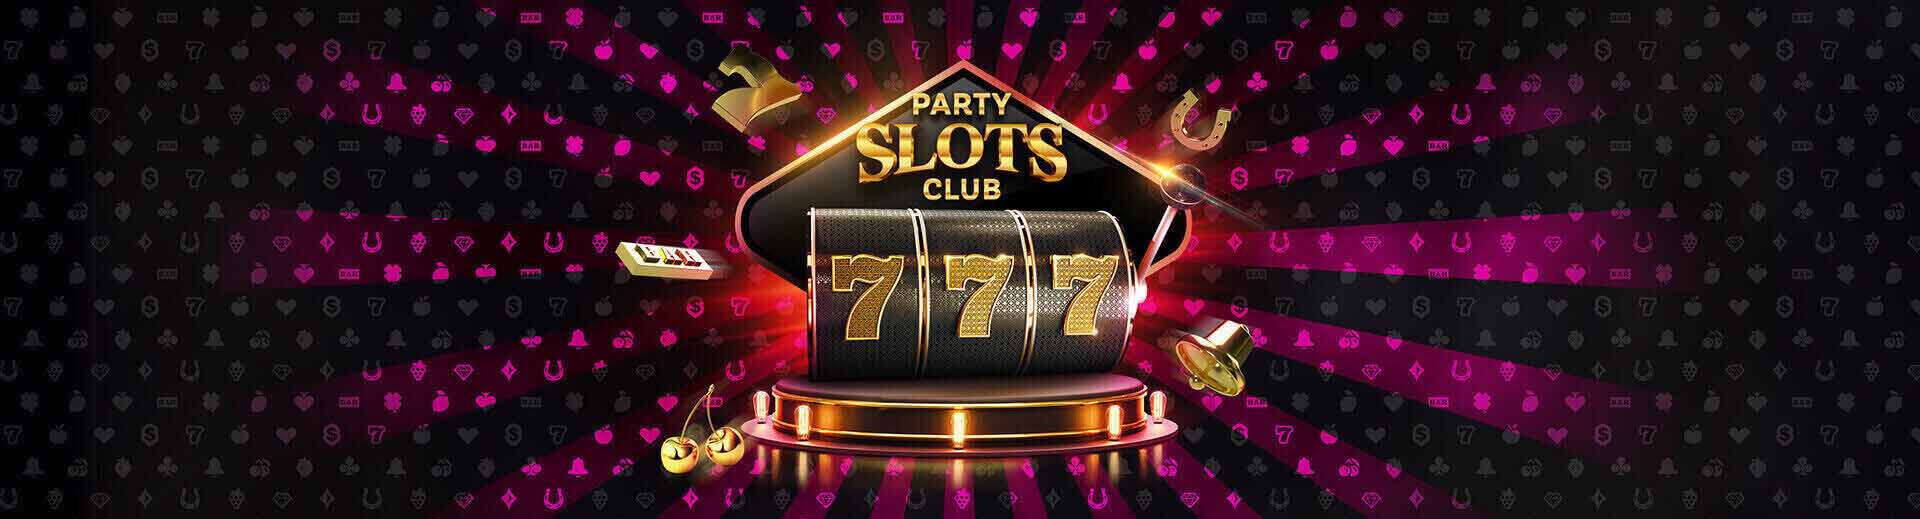 17206-Slots-Club-casino-master-production-casino-banner